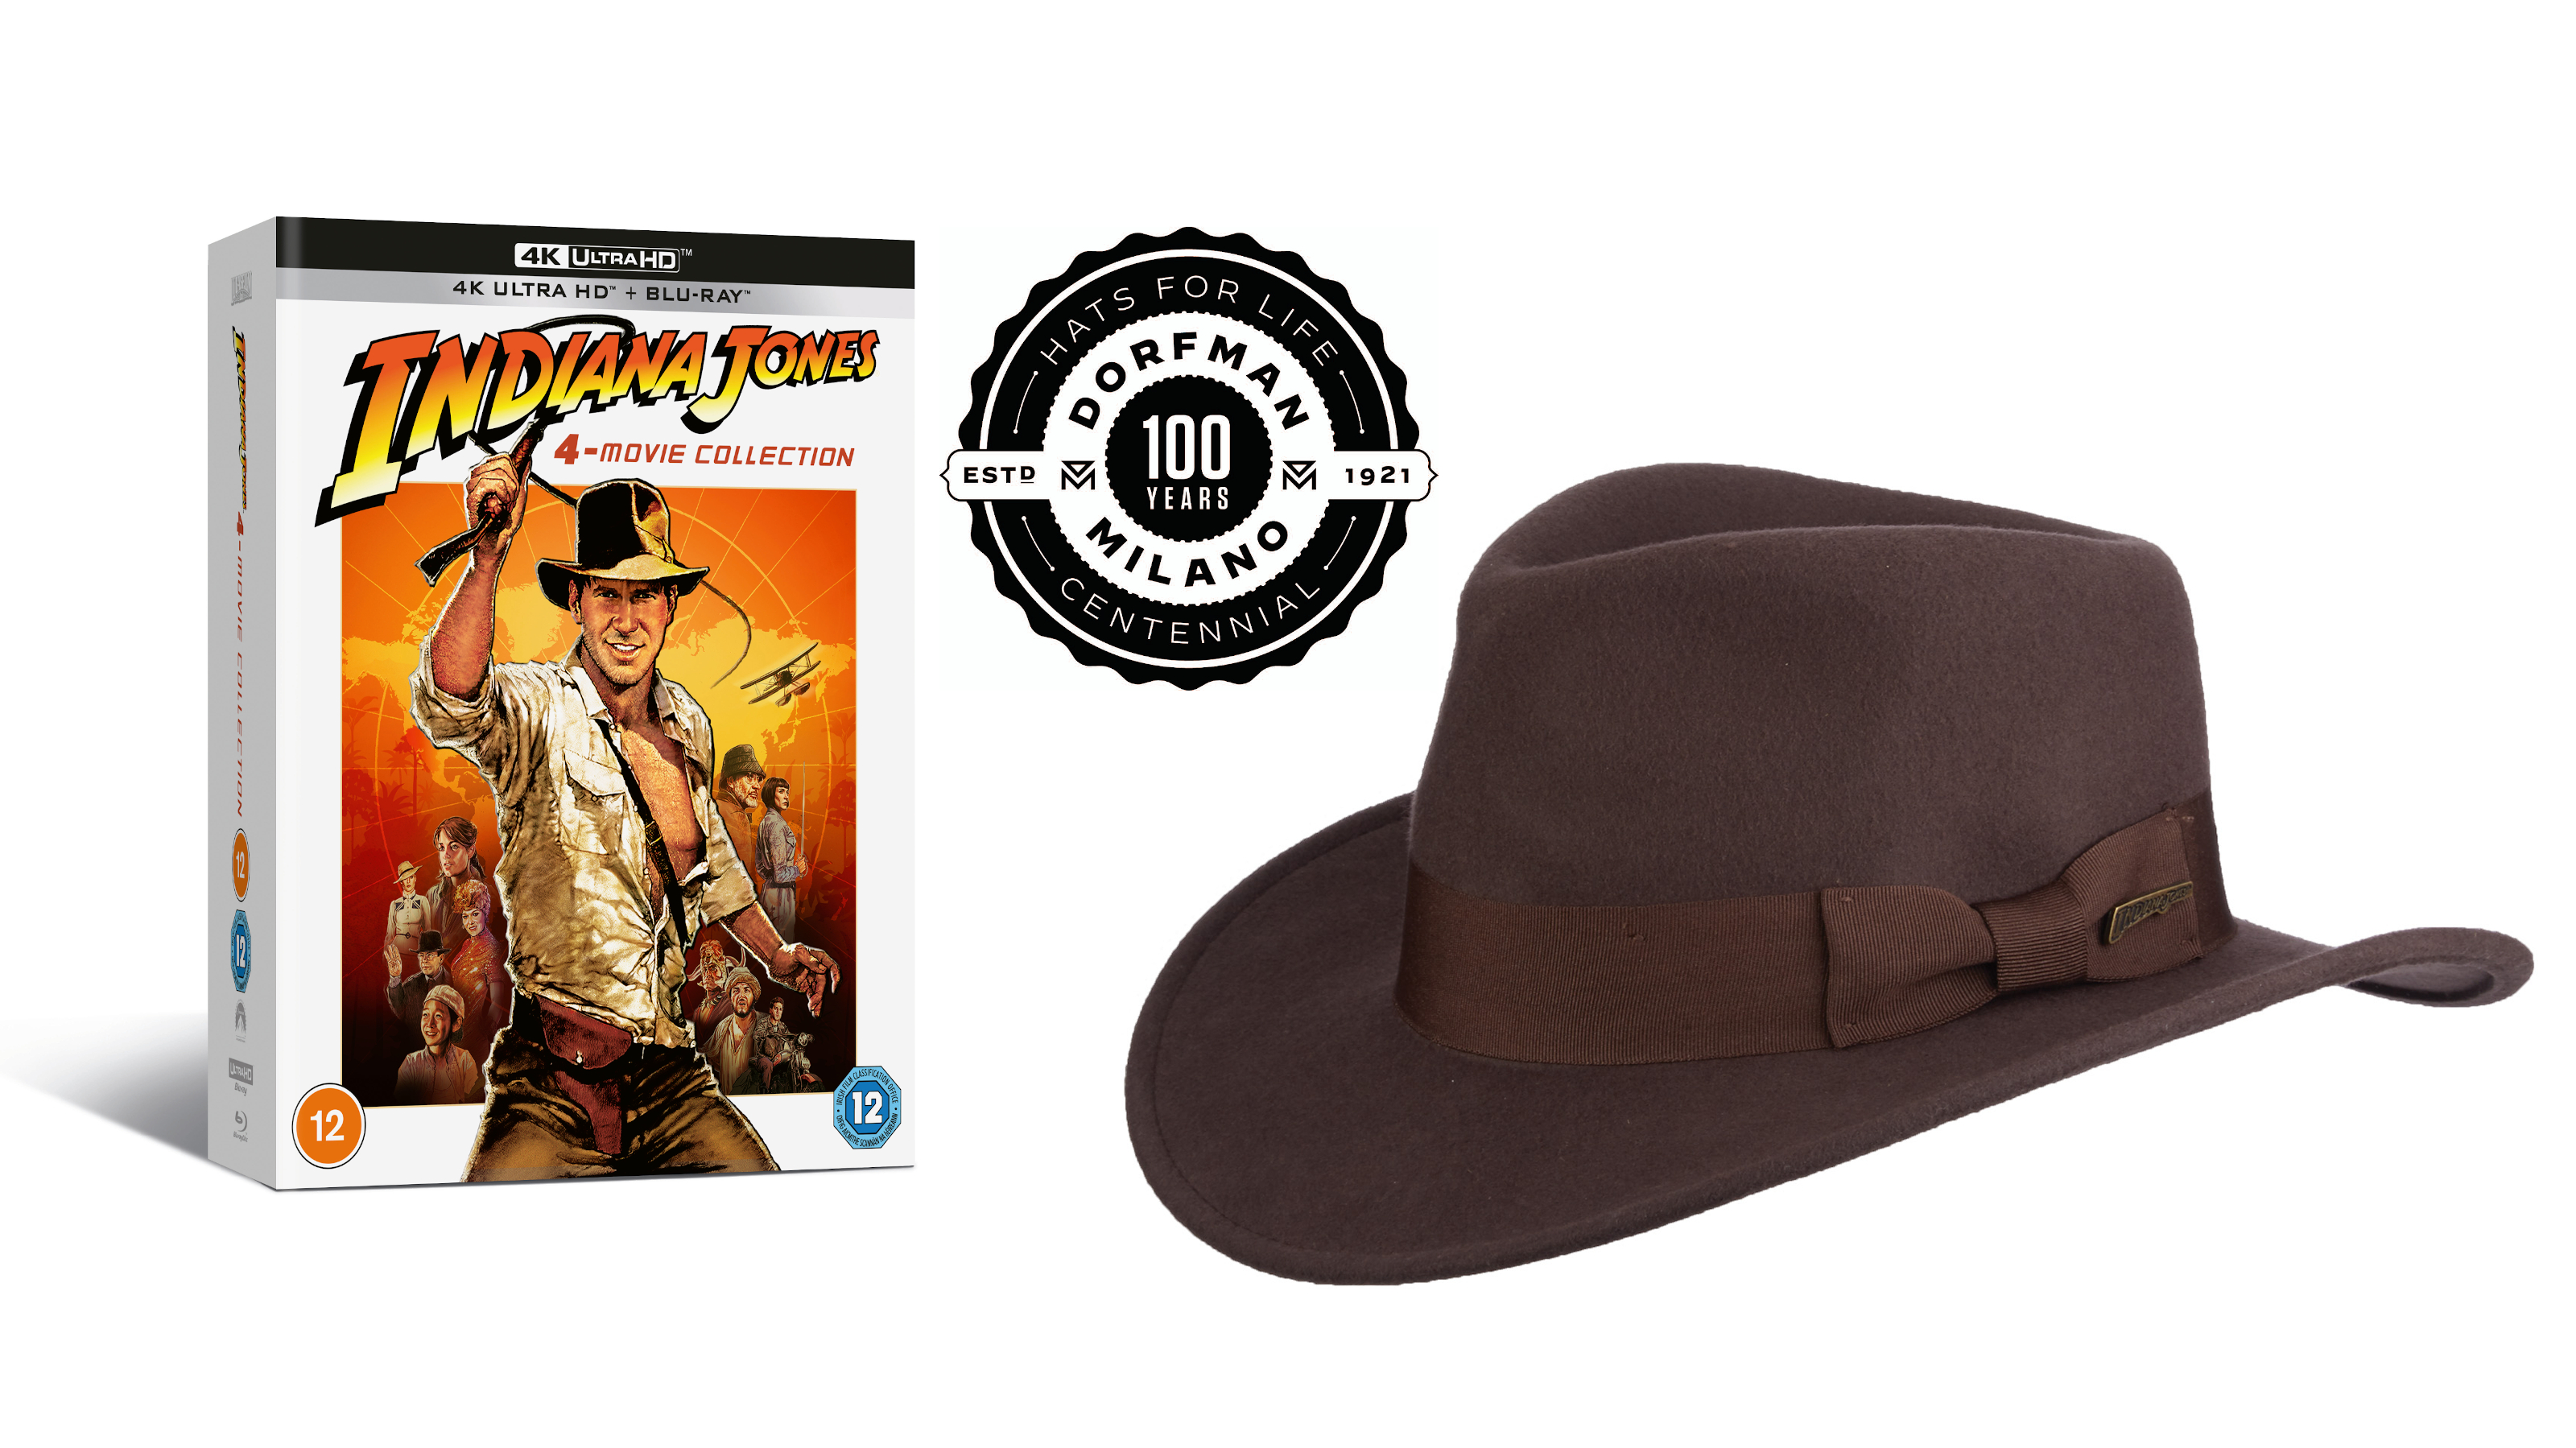 Win an Indiana Jones 4K box set and hat!